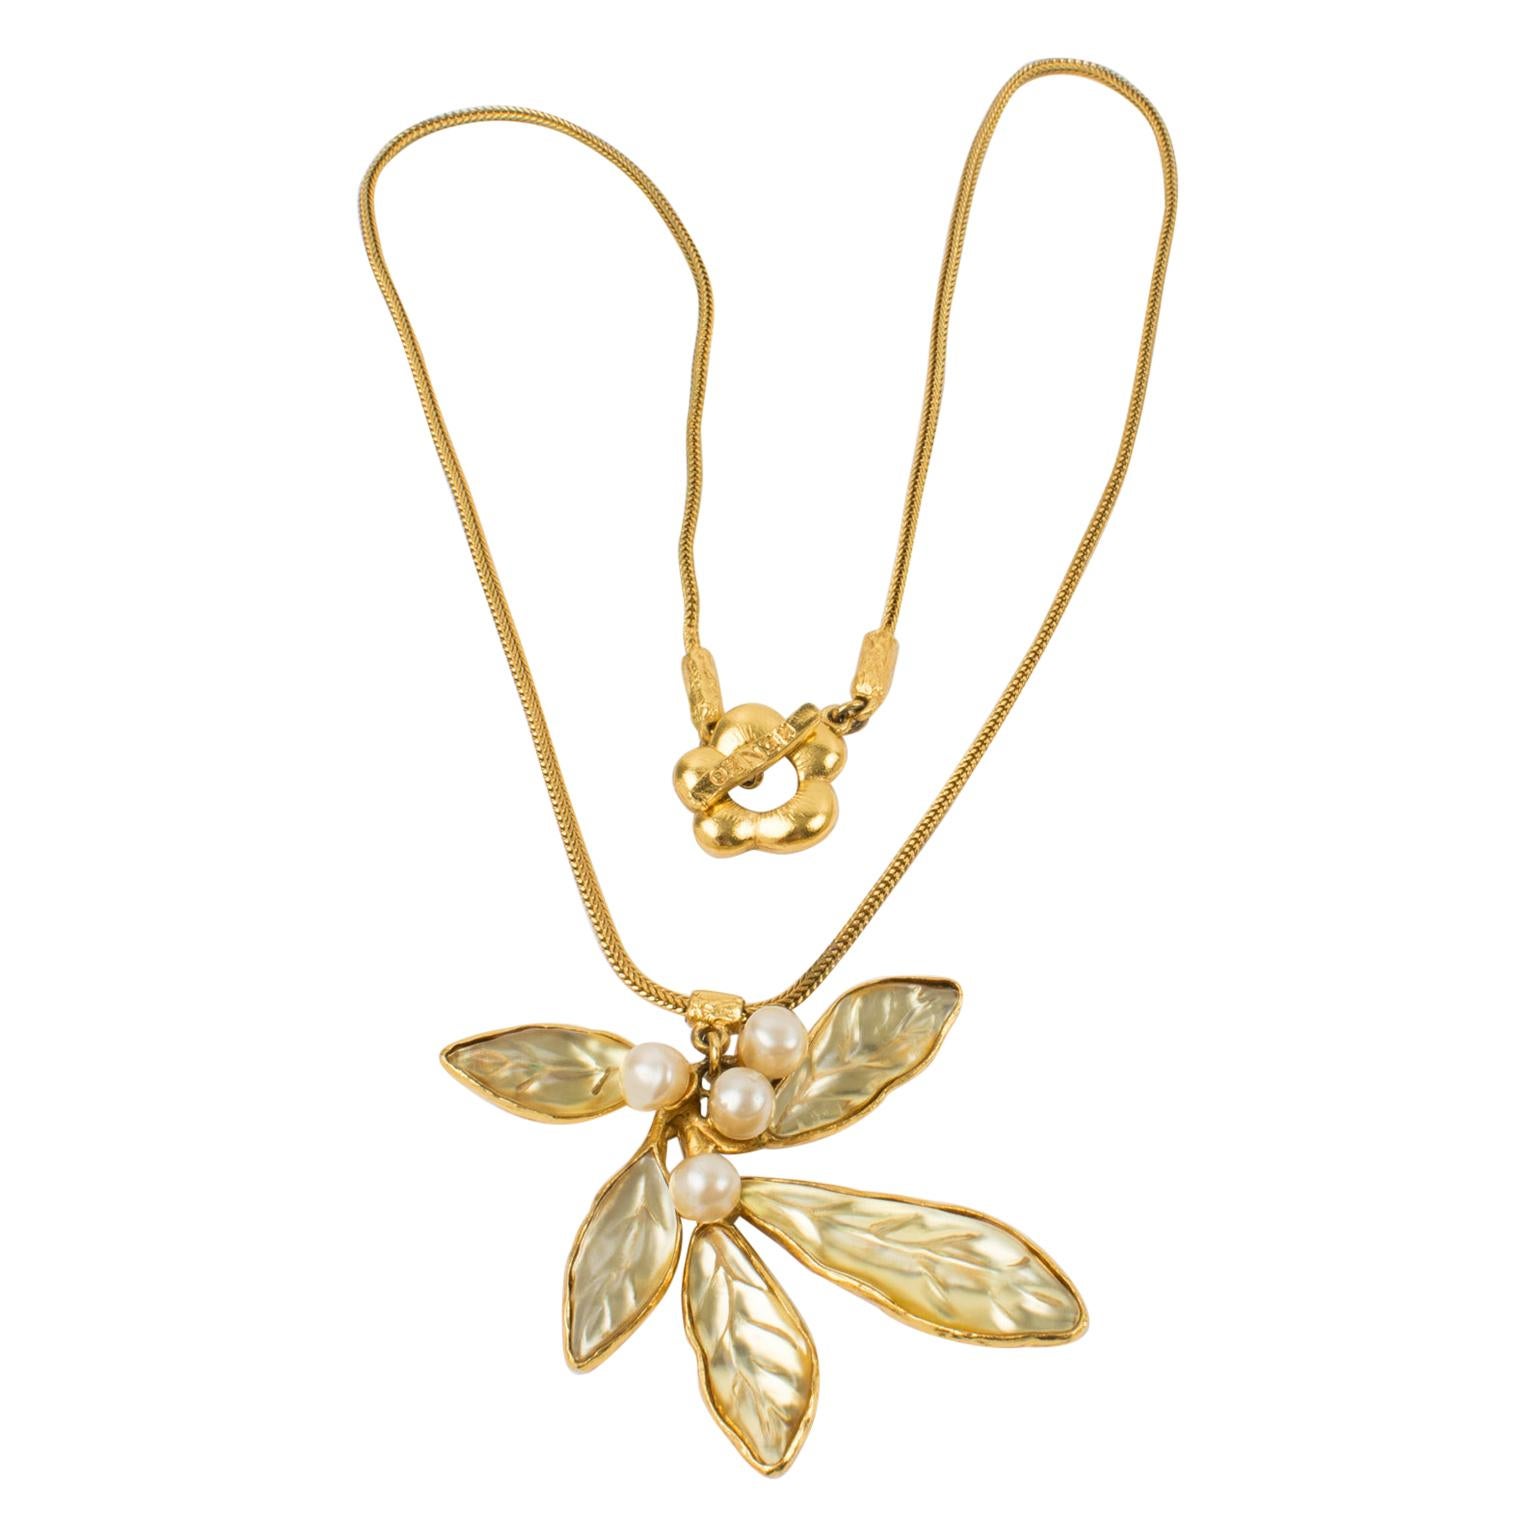 Kenzo Paris Gilt Metal Mistletoe Flower Necklace with Yellow Resin Leaves